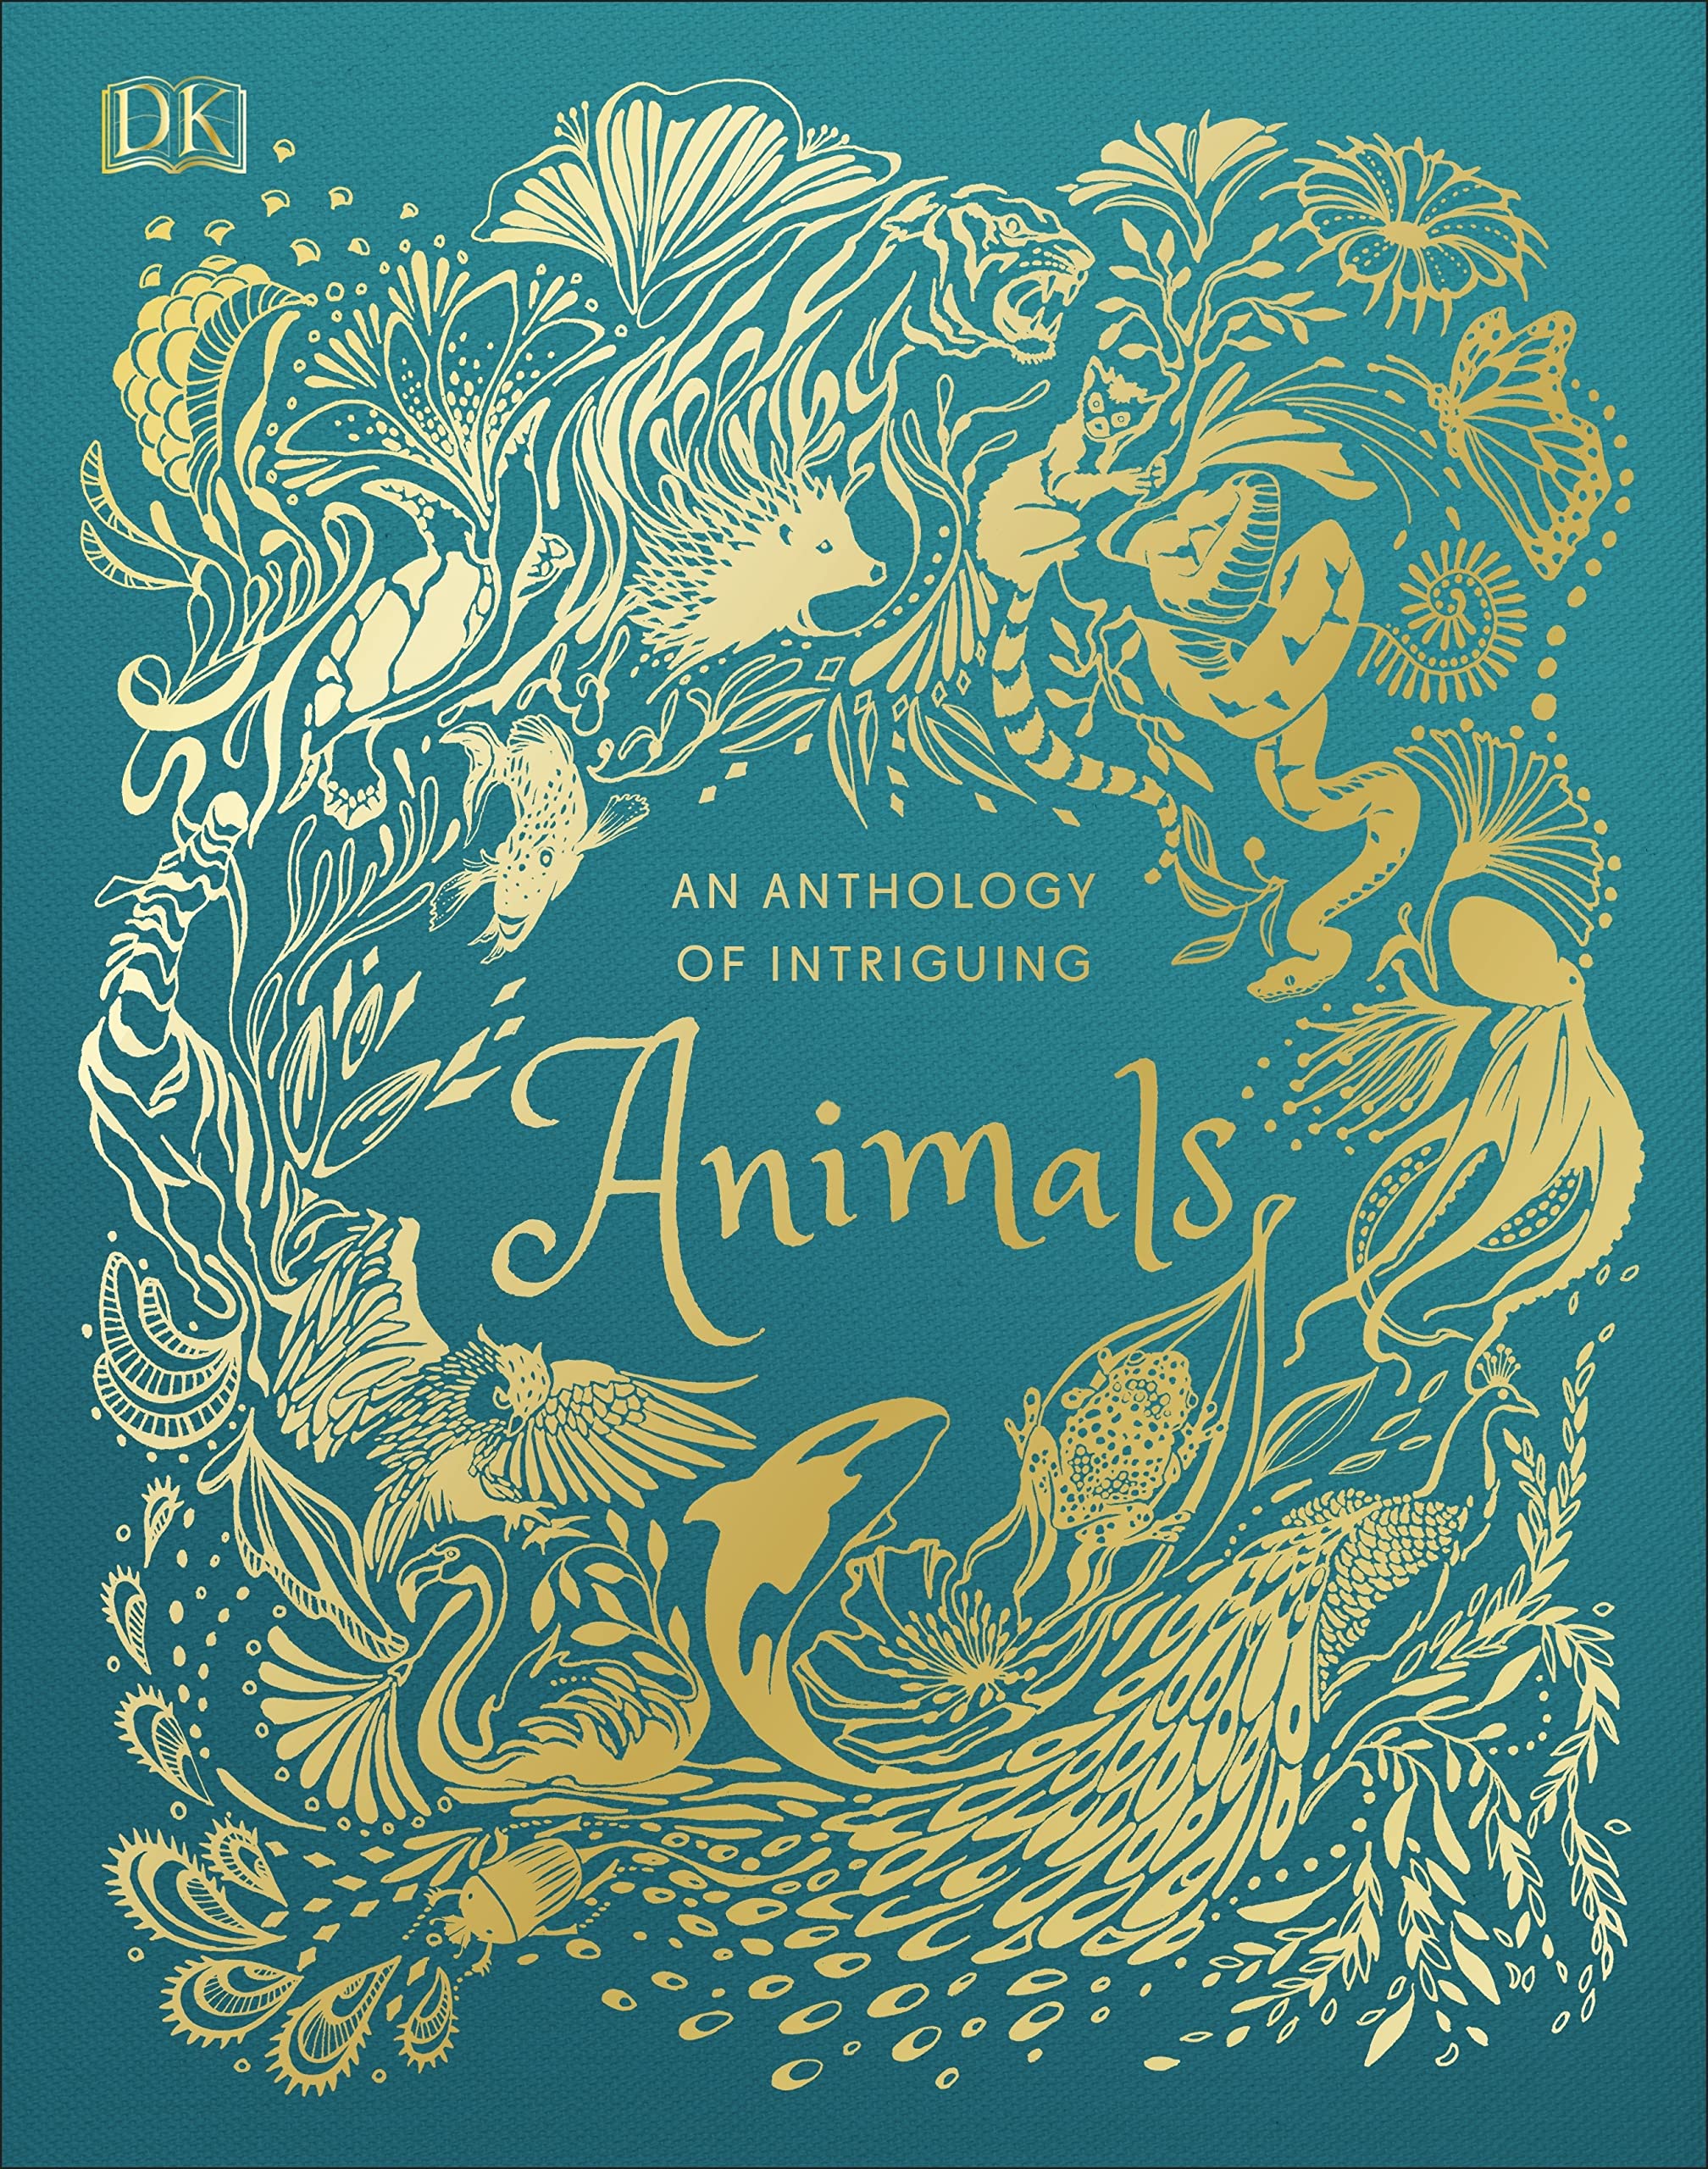 An Anthology of Intriguing Animals (DK Children's Anthologies)